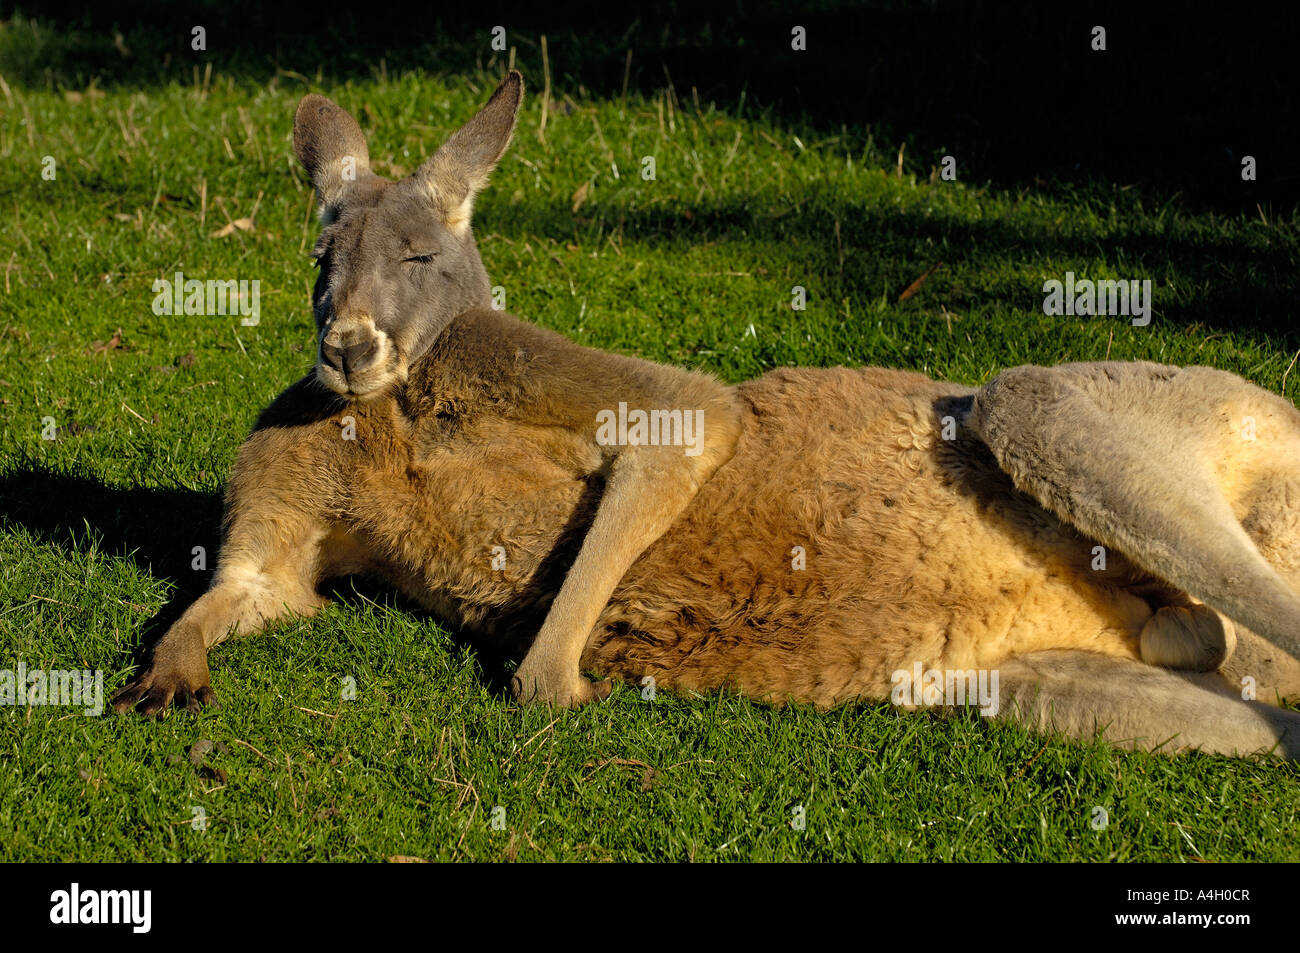 Red kangaroo, Macropus rufus, southaustralia, australia Stock Photo